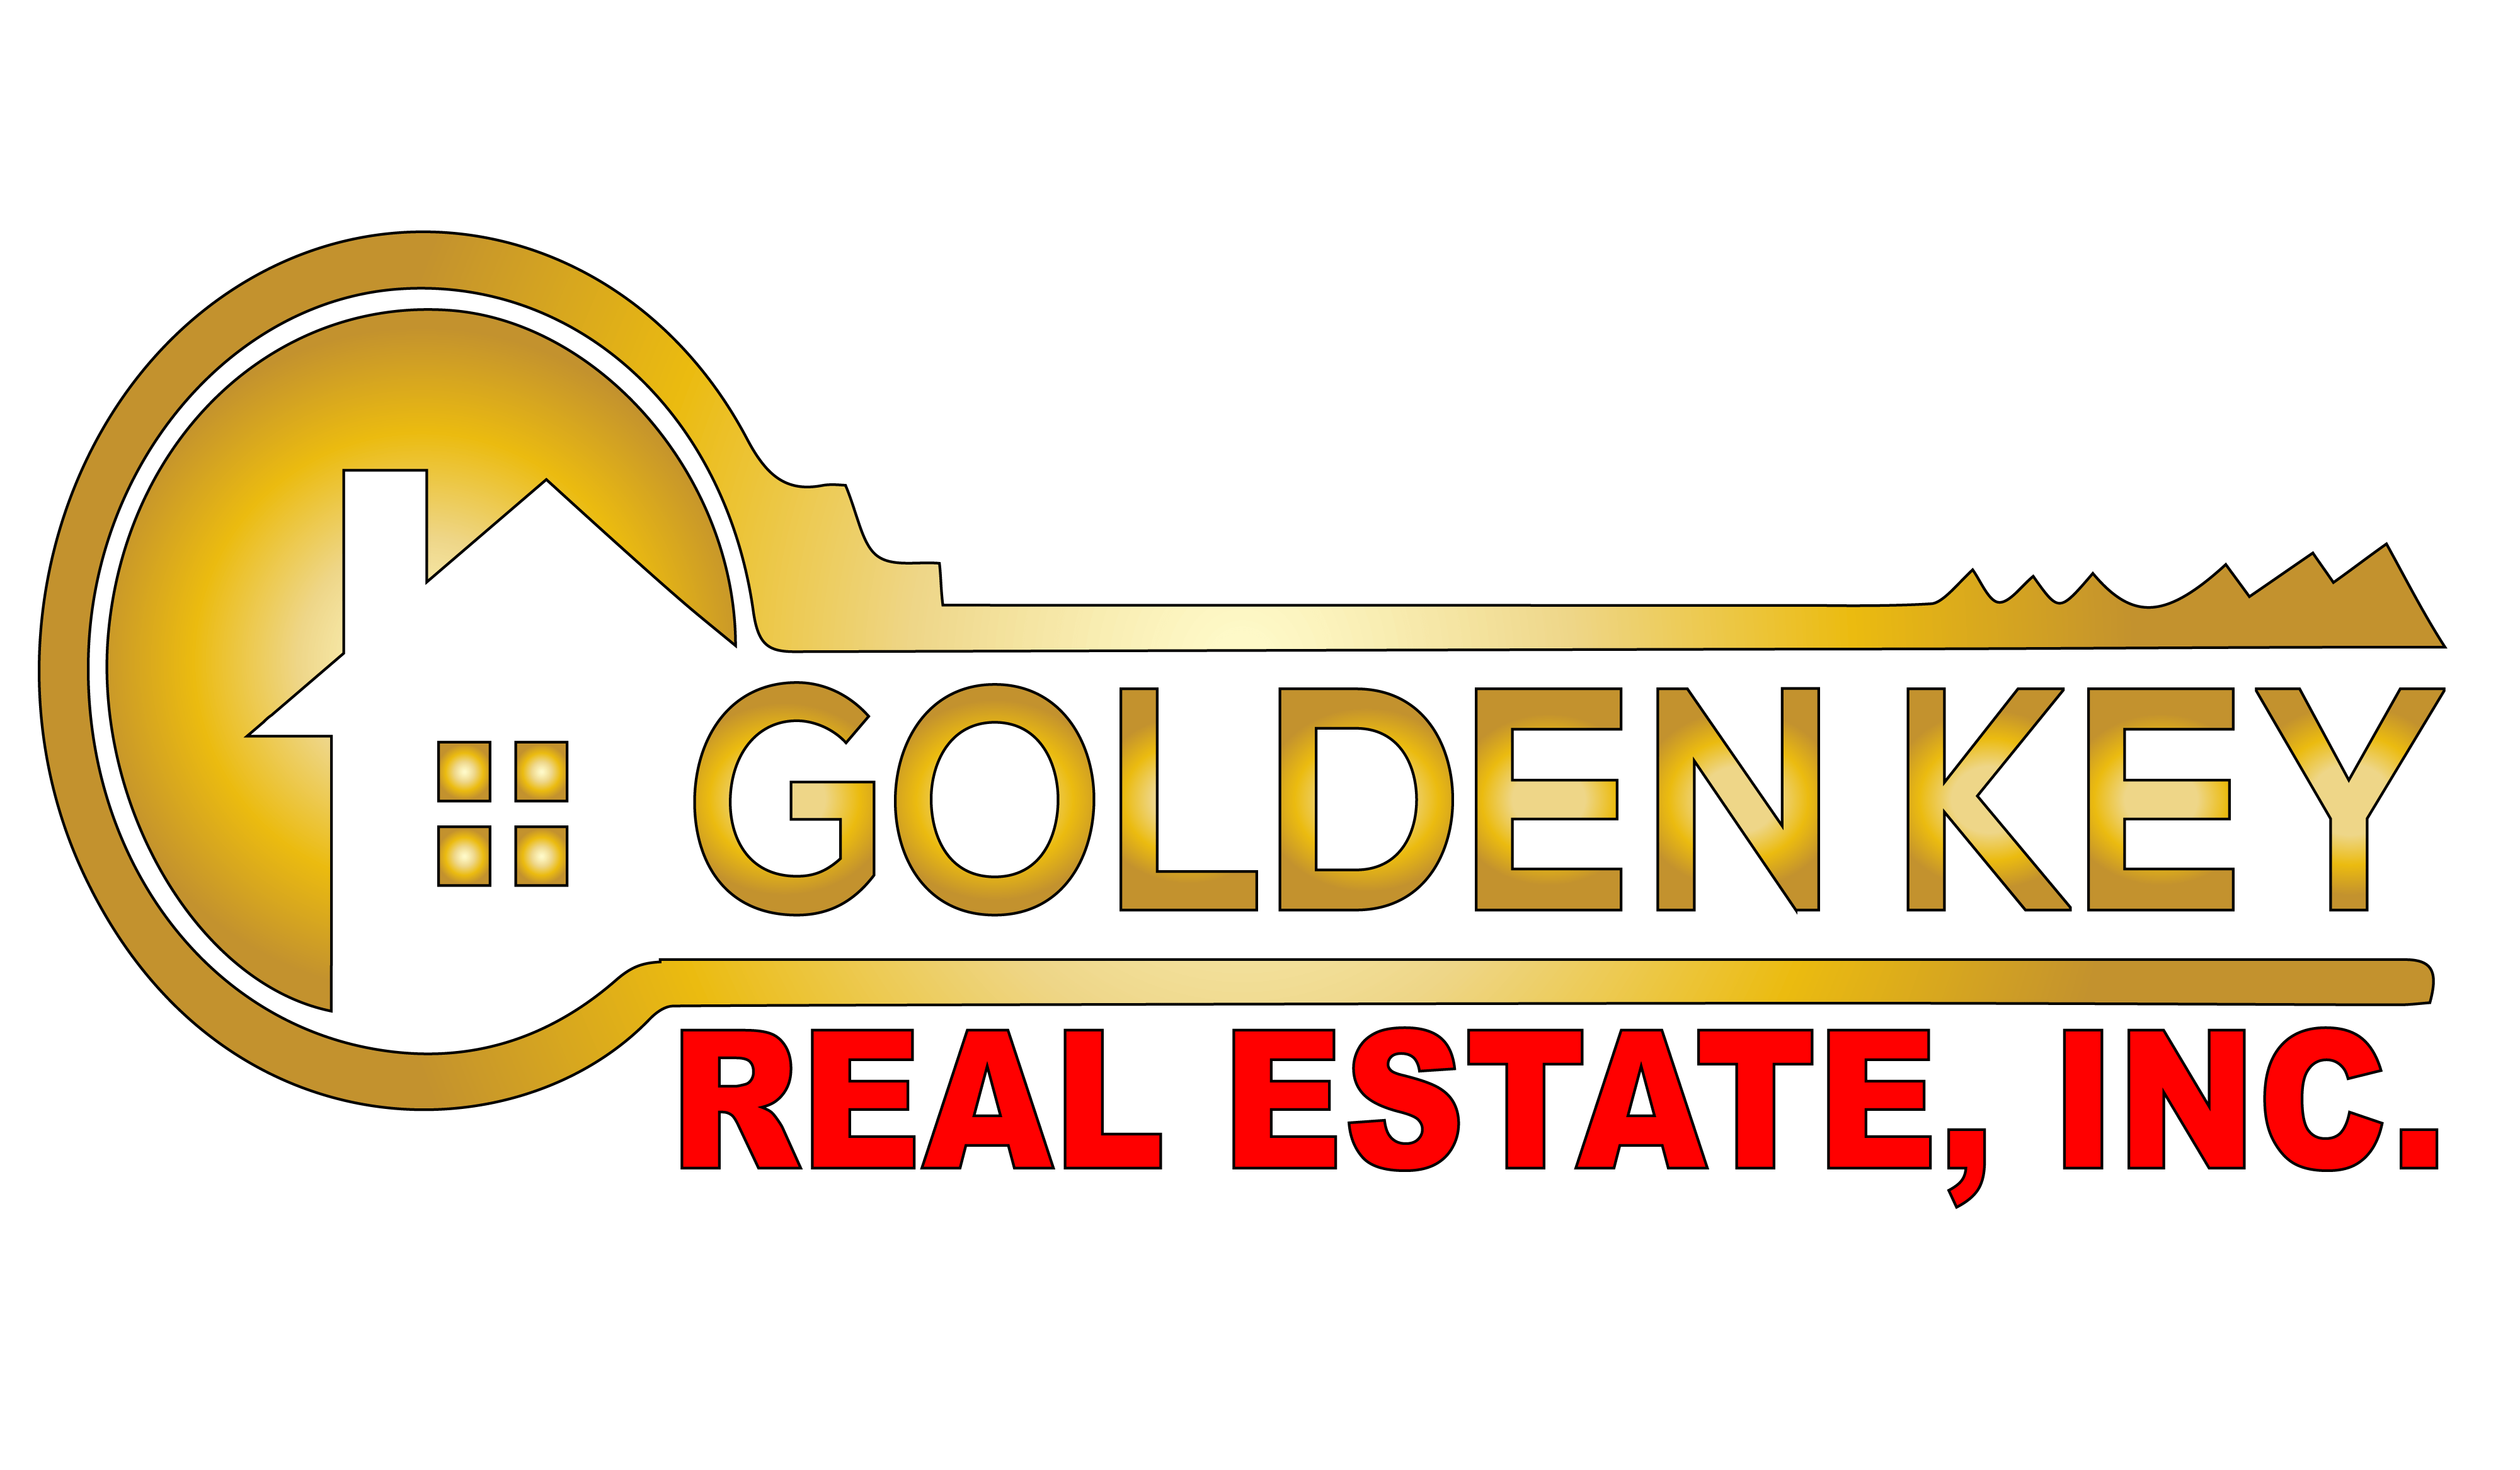 Key Real Estate Logo - REALTORS in the Bay Area | Golden Key Real Estate, Inc. | Ikenna ...